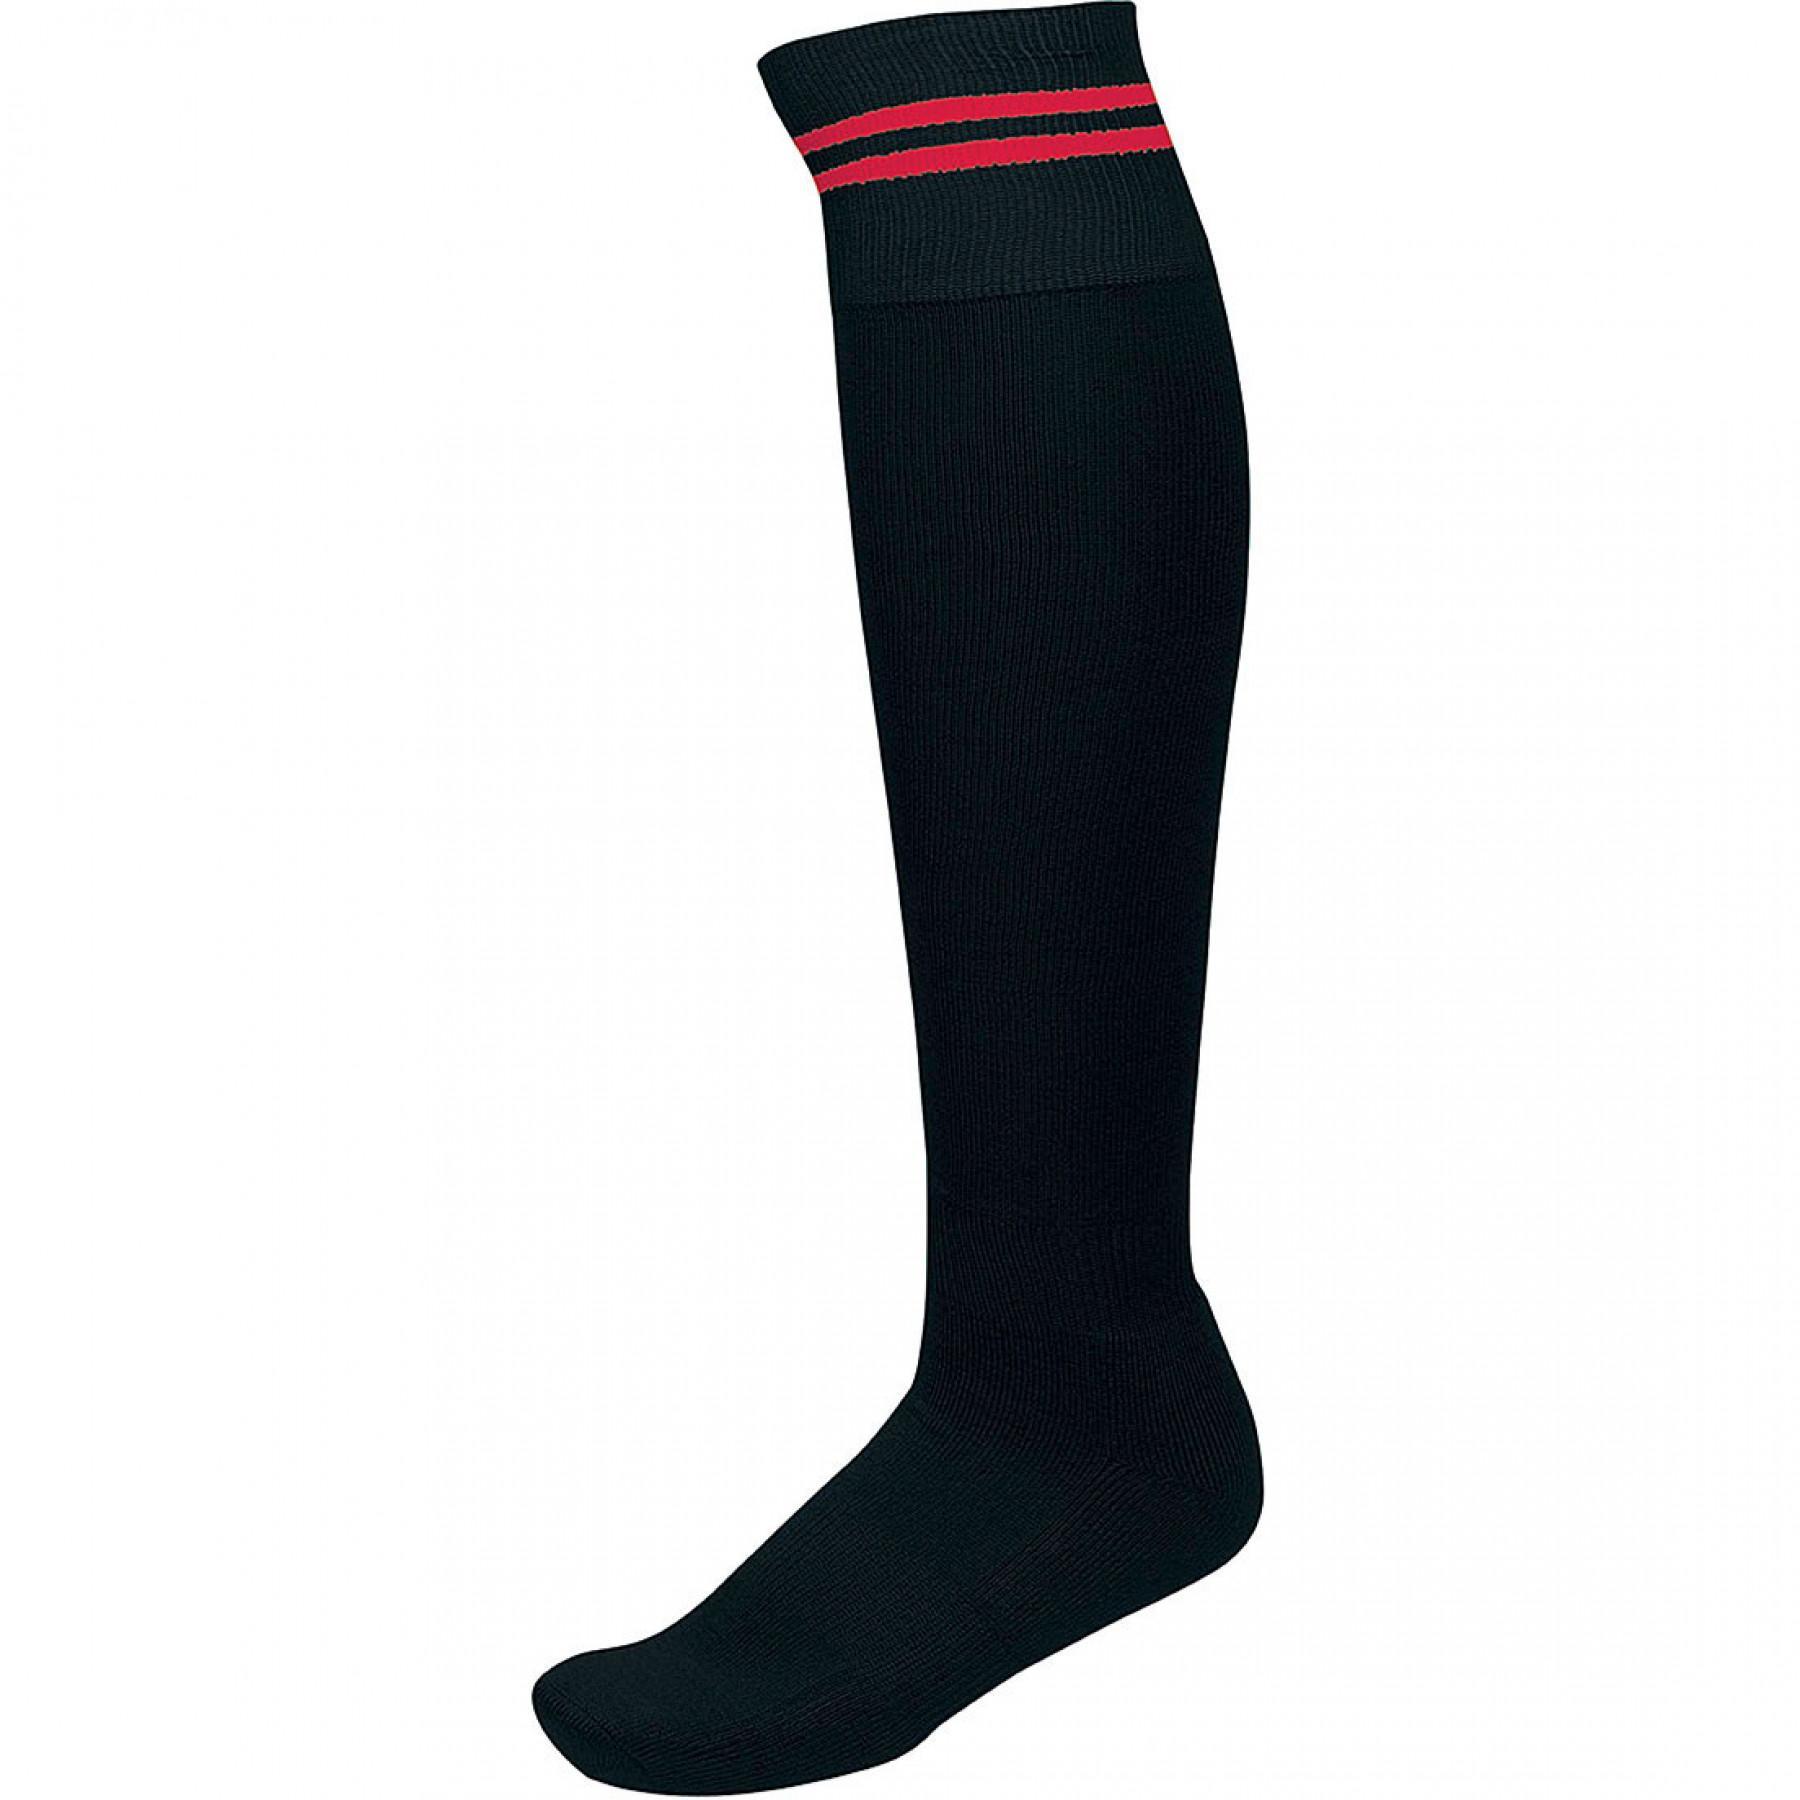 Striped sports socks Proact